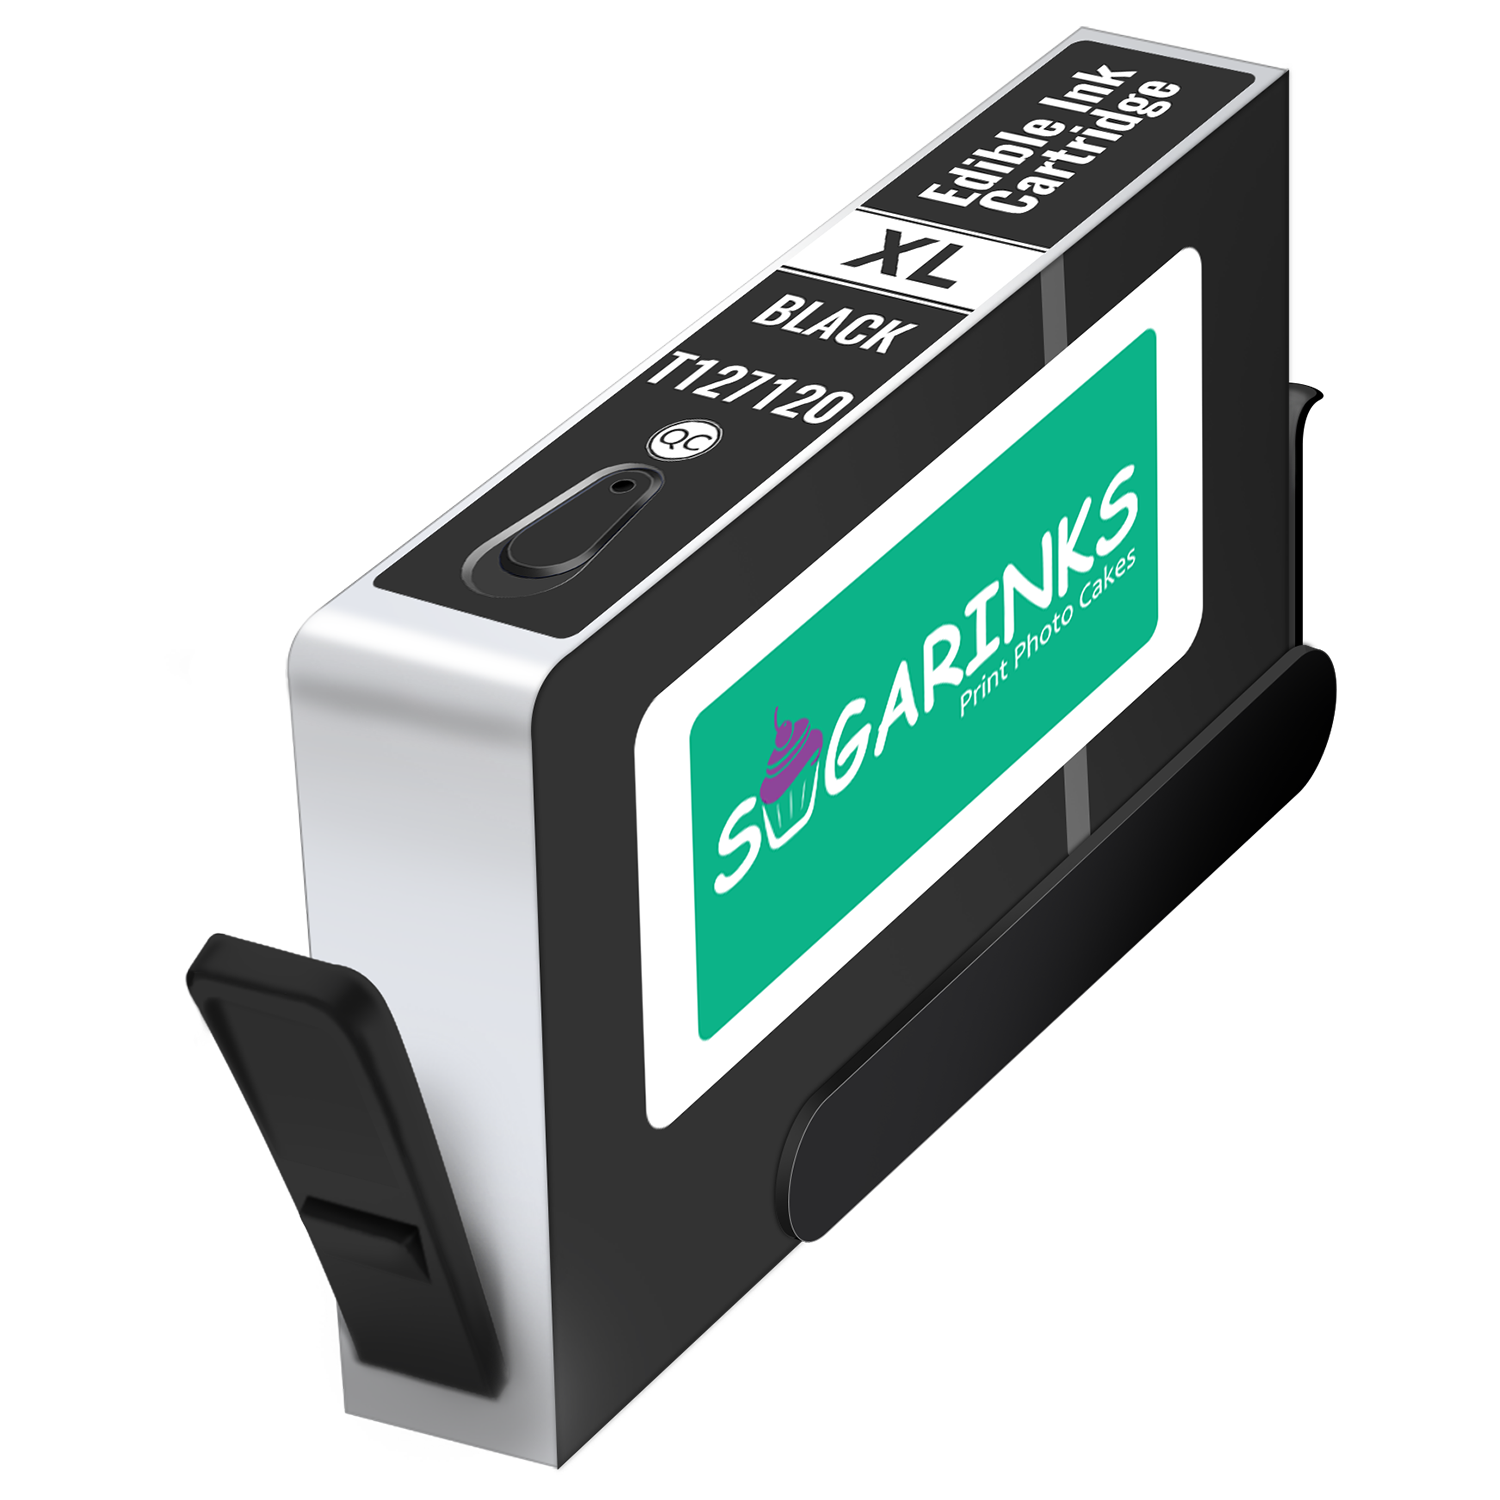 Sugarinks Edible Ink Cartridges T127120 for Epson Edible Printers – Black 